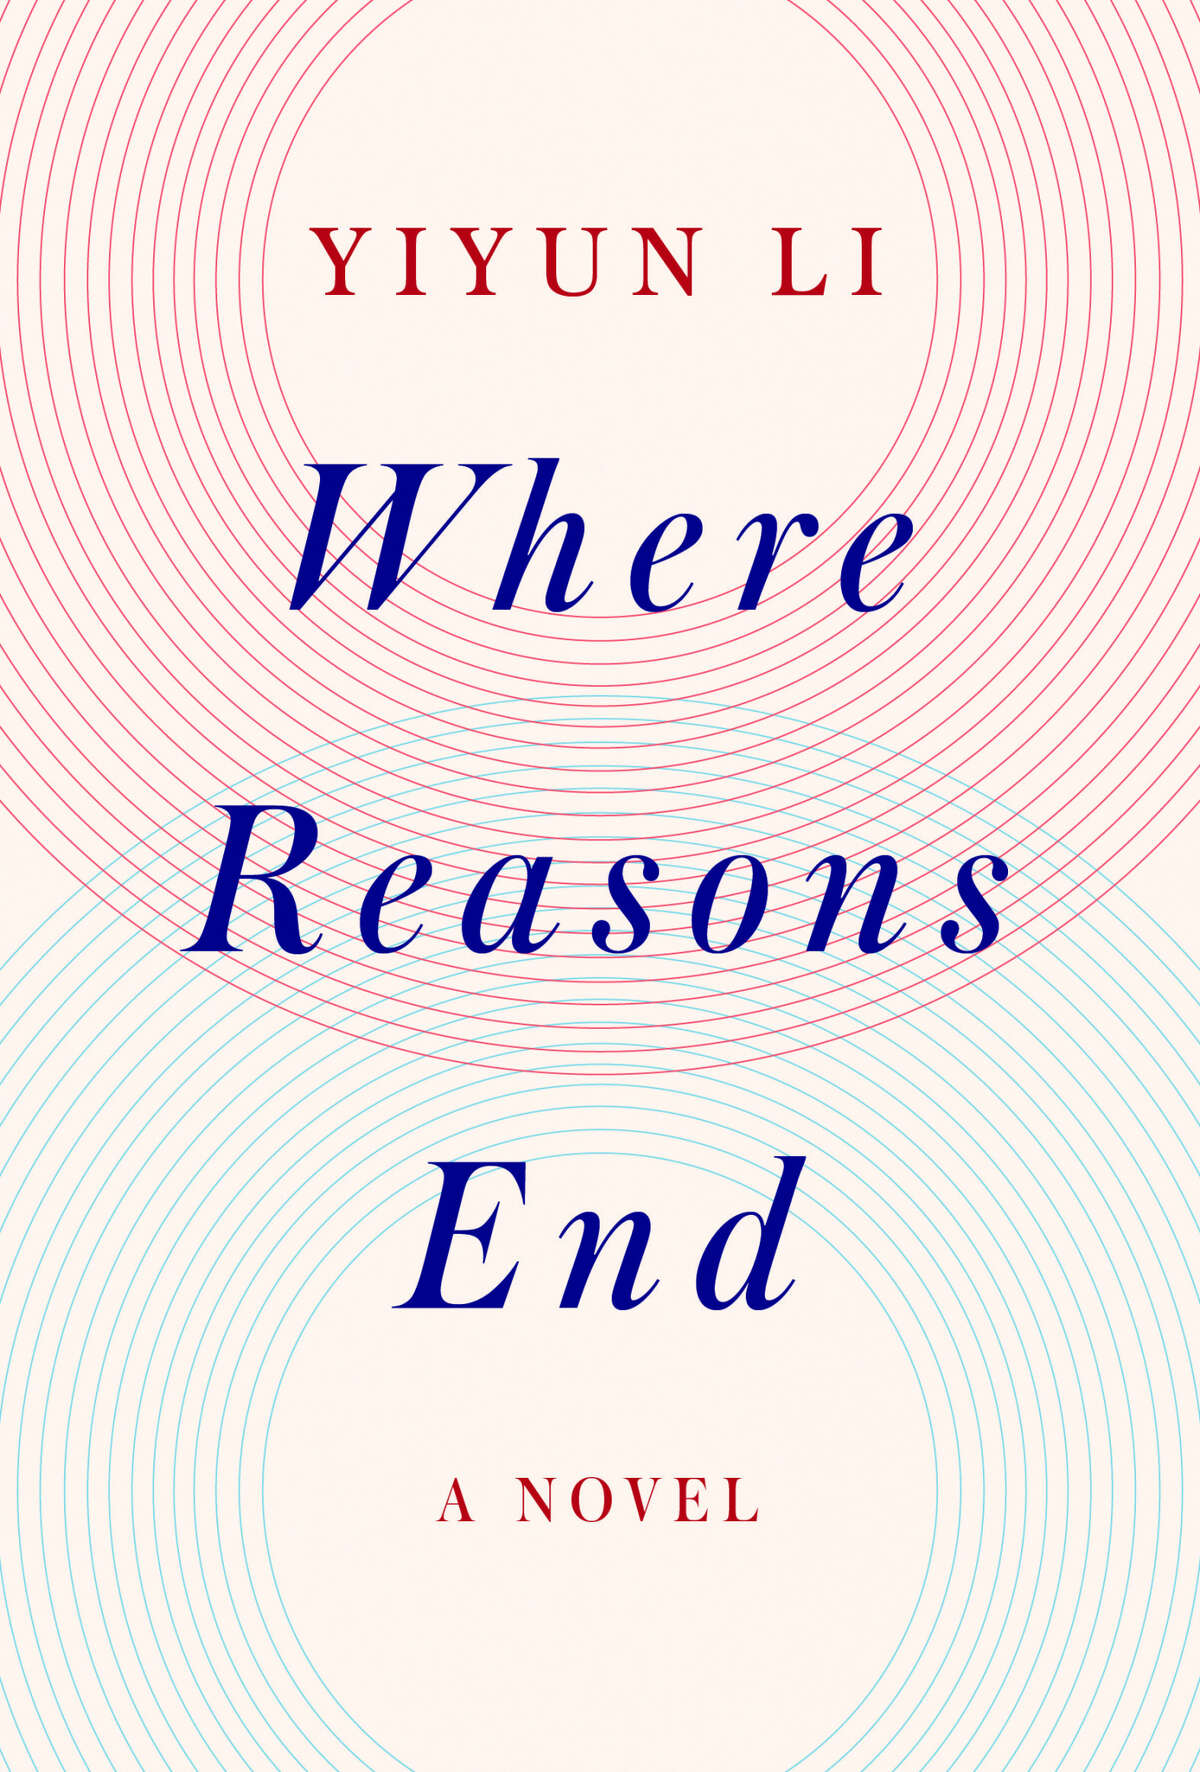 "Where Reasons End" is Li's third novel.